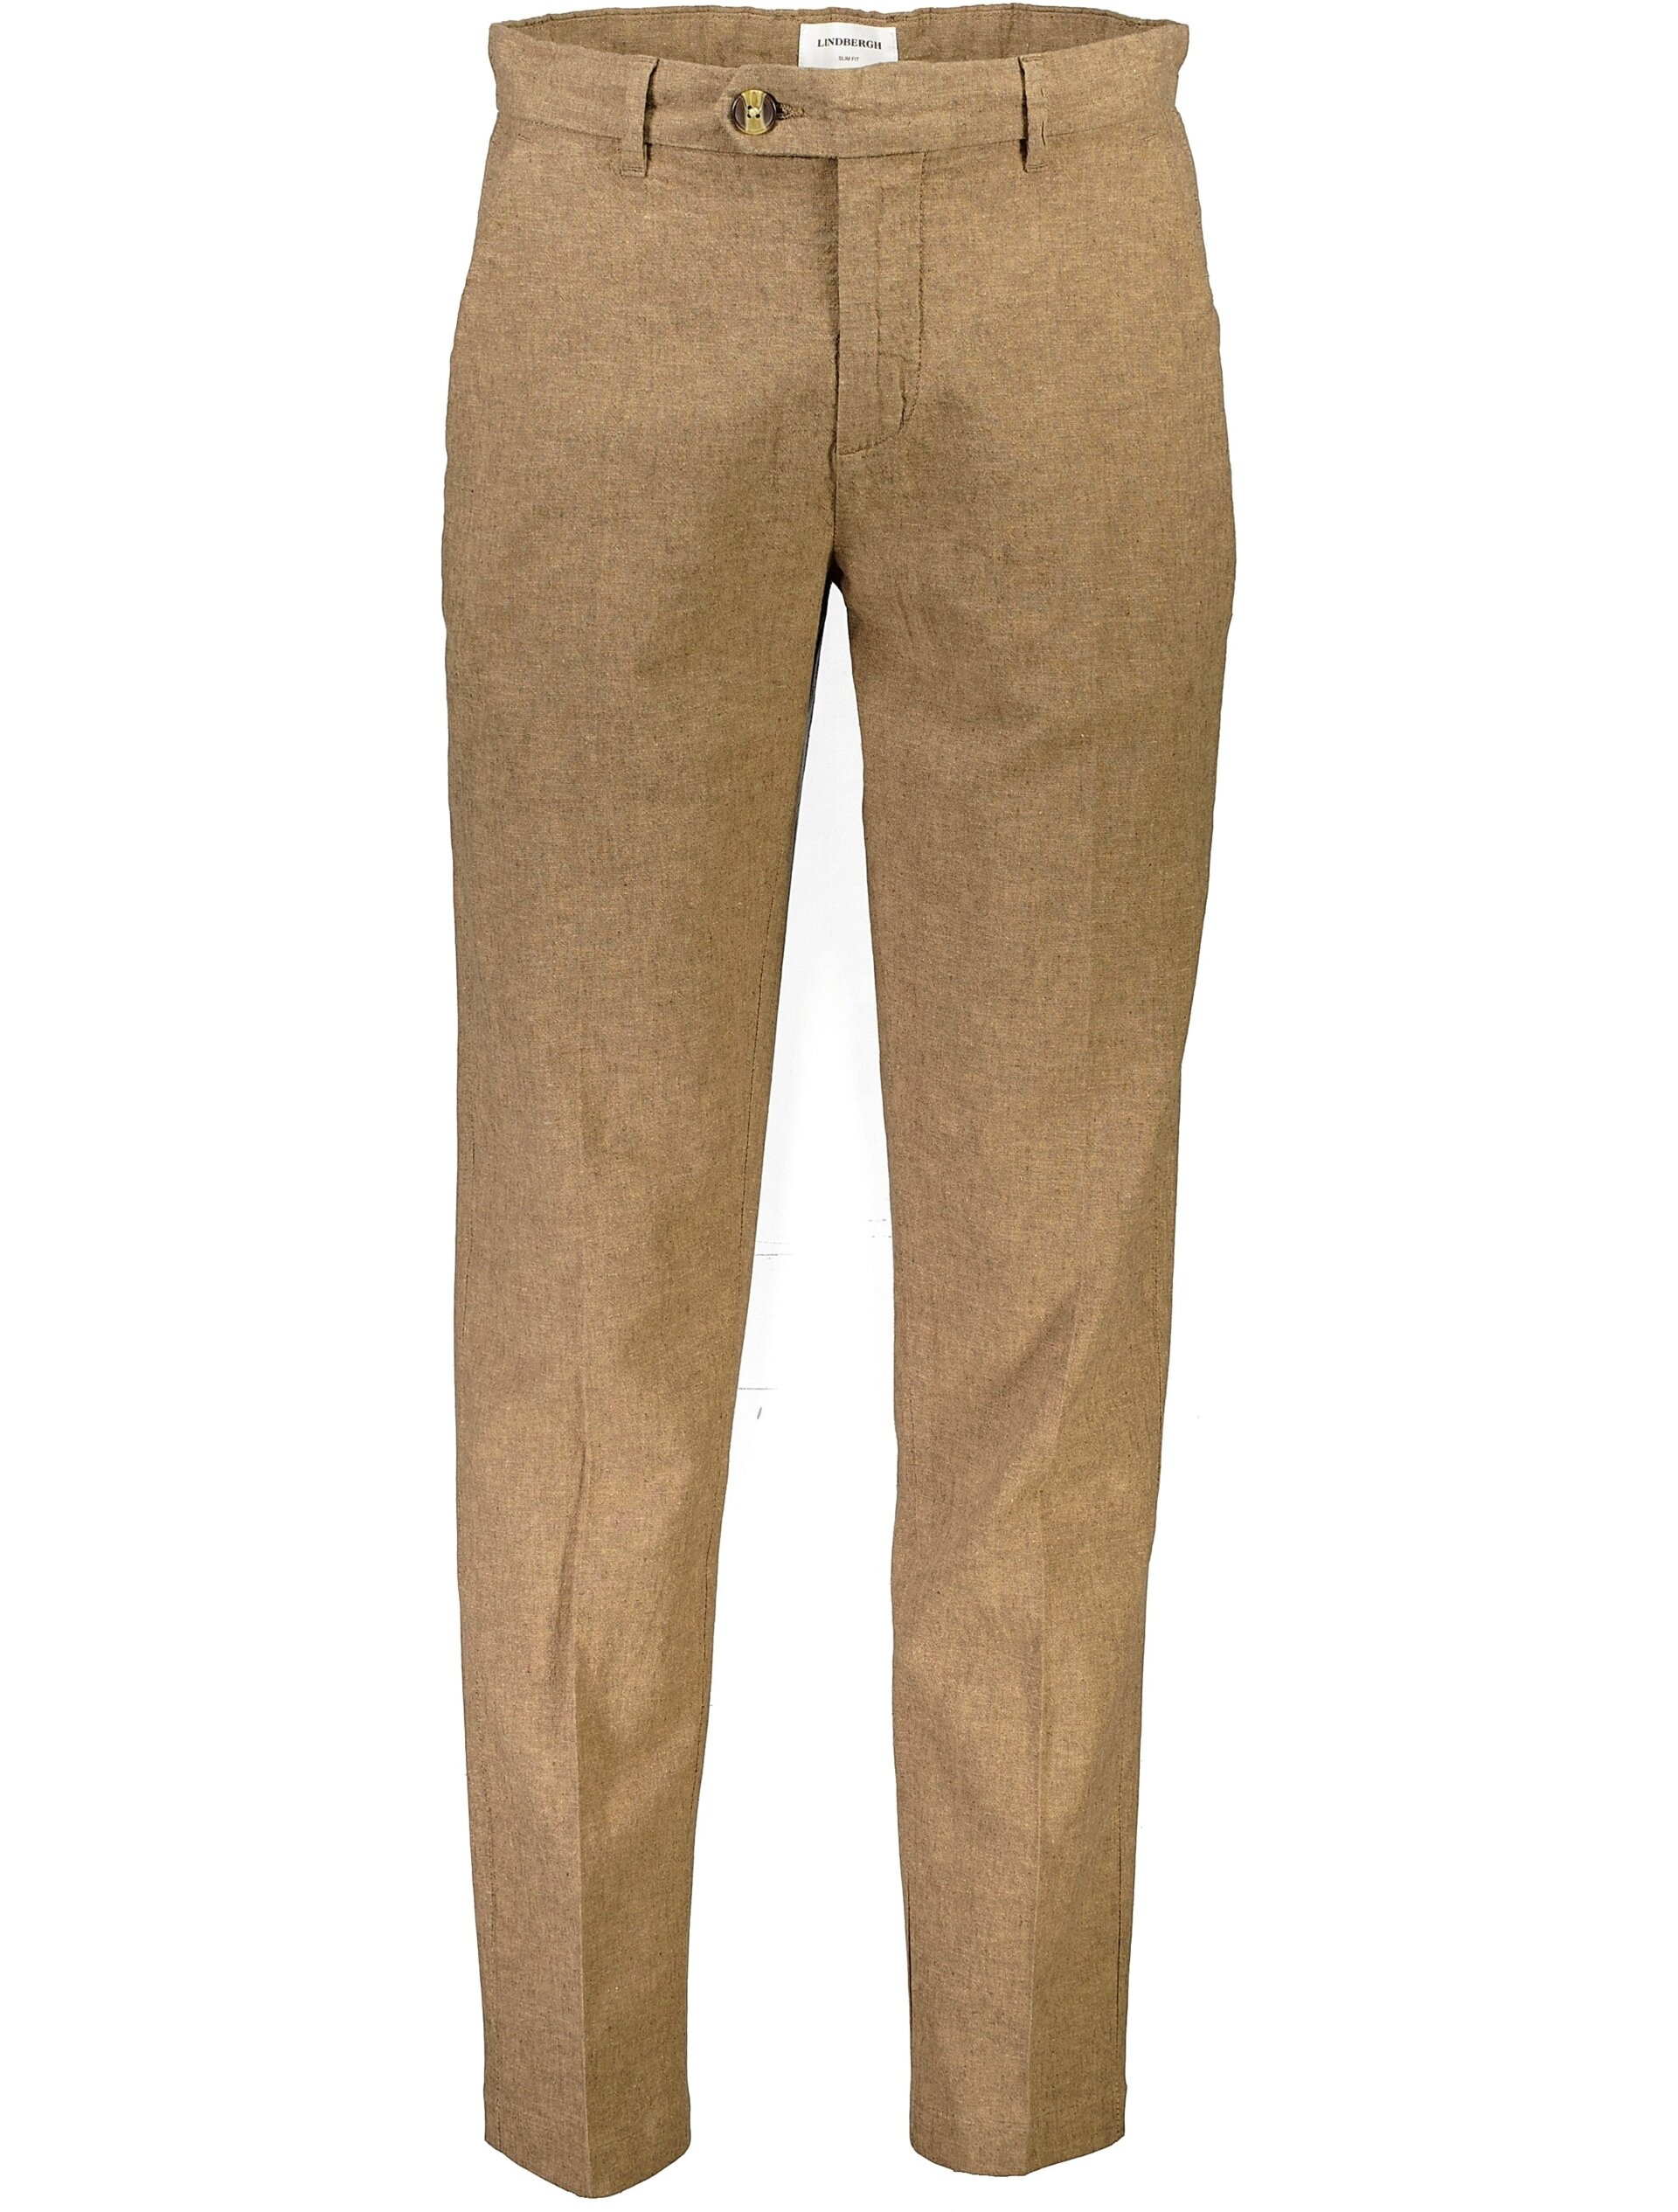 Lindbergh Casual pants grey / dk stone